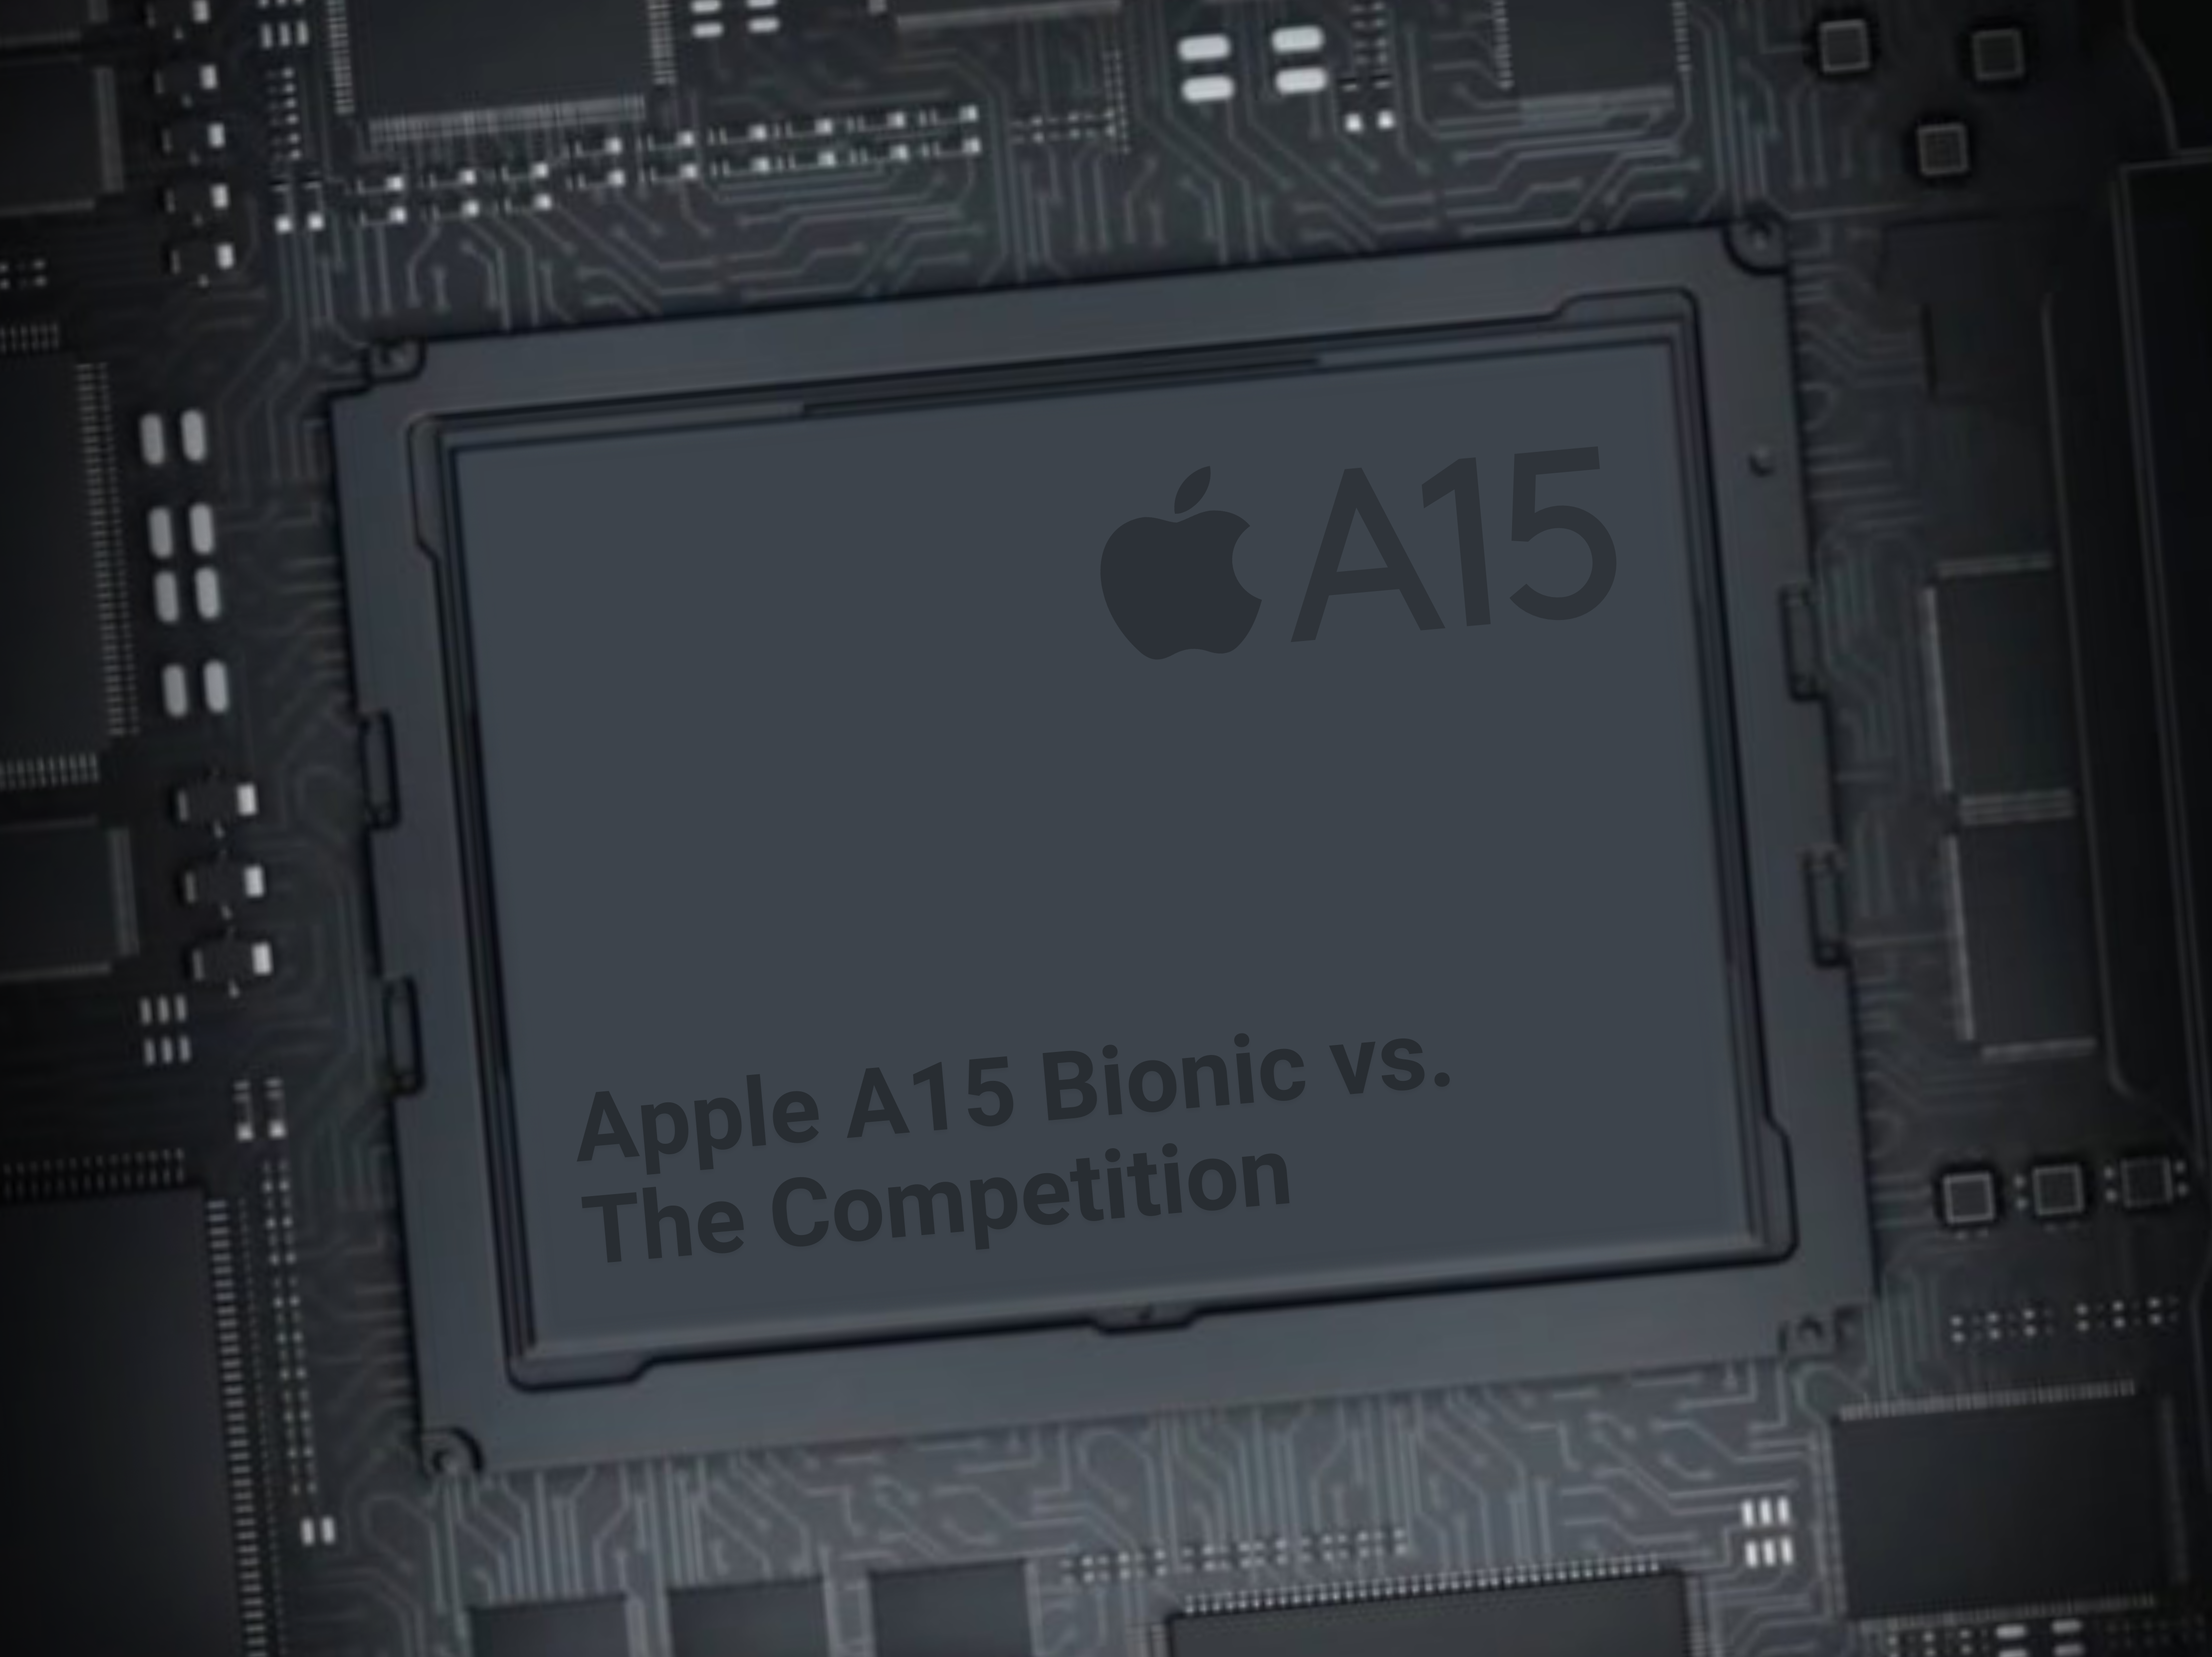 A15 bionic chip